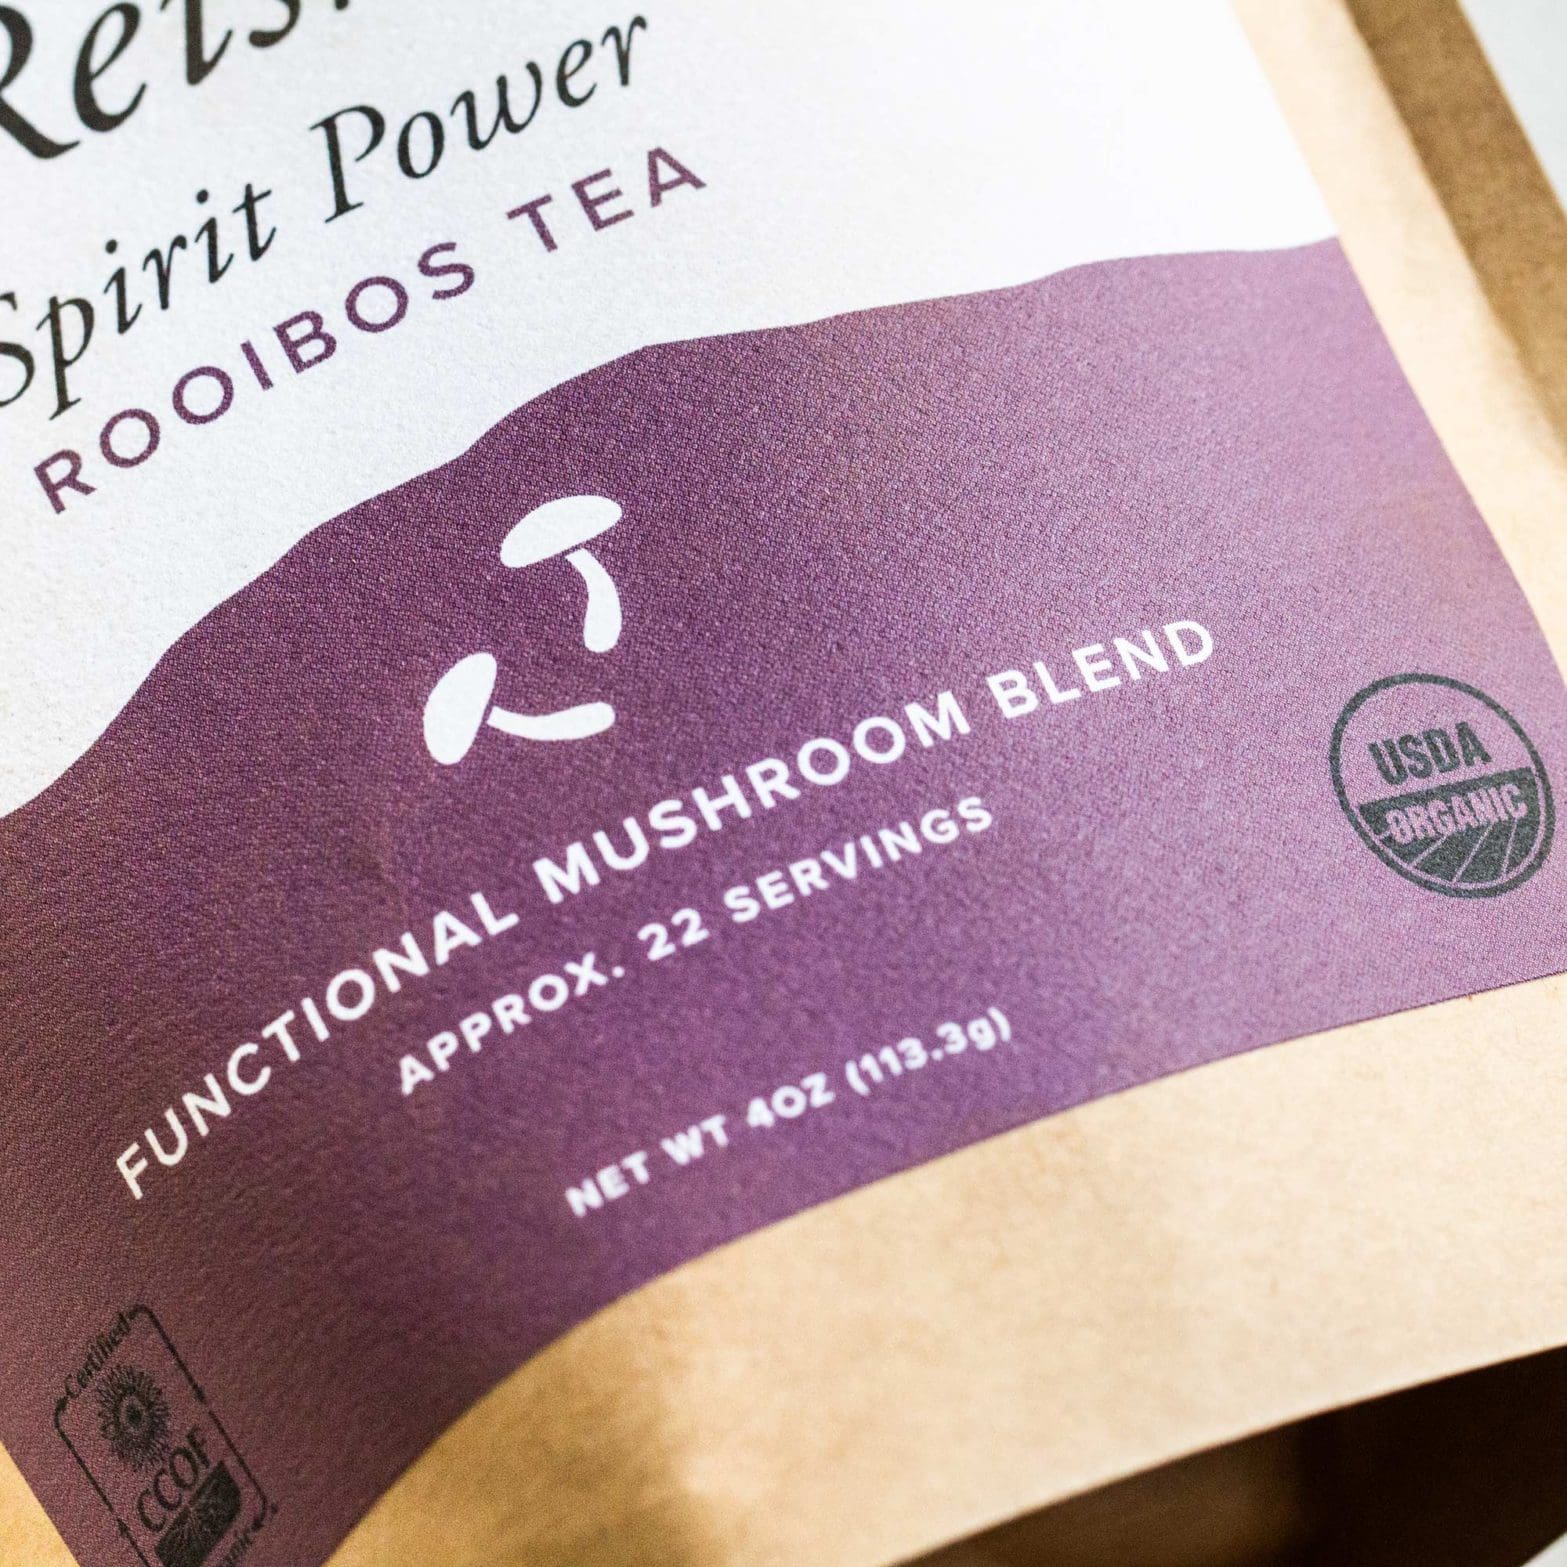 Reishi Mushroom Spirit Power Rooibos Tea – 4oz – Functional Mushroom Blend